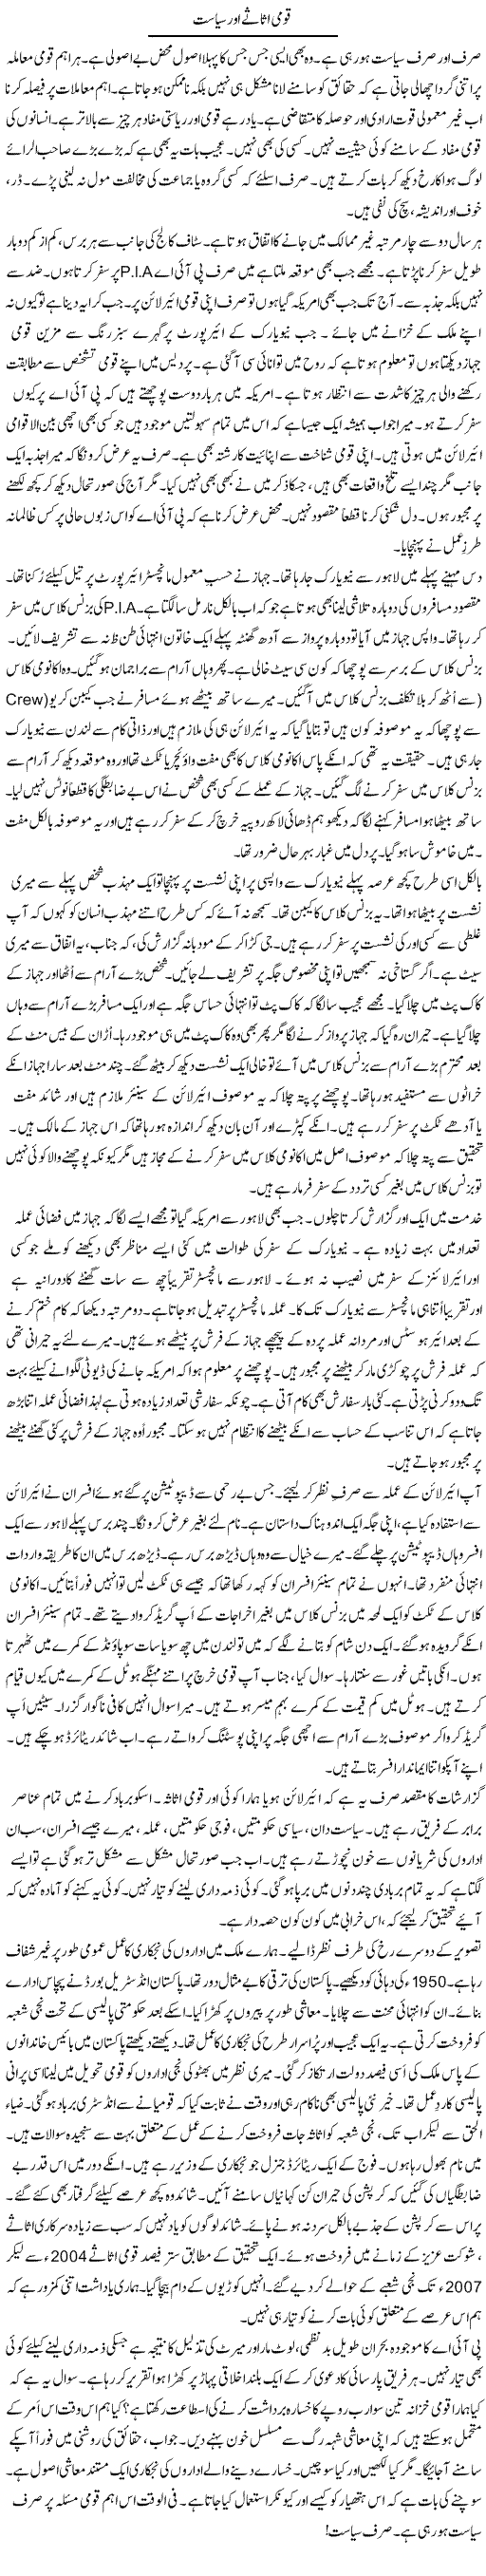 Qaumi Asasay Aor Siasat | Rao Manzar Hayat | Daily Urdu Columns